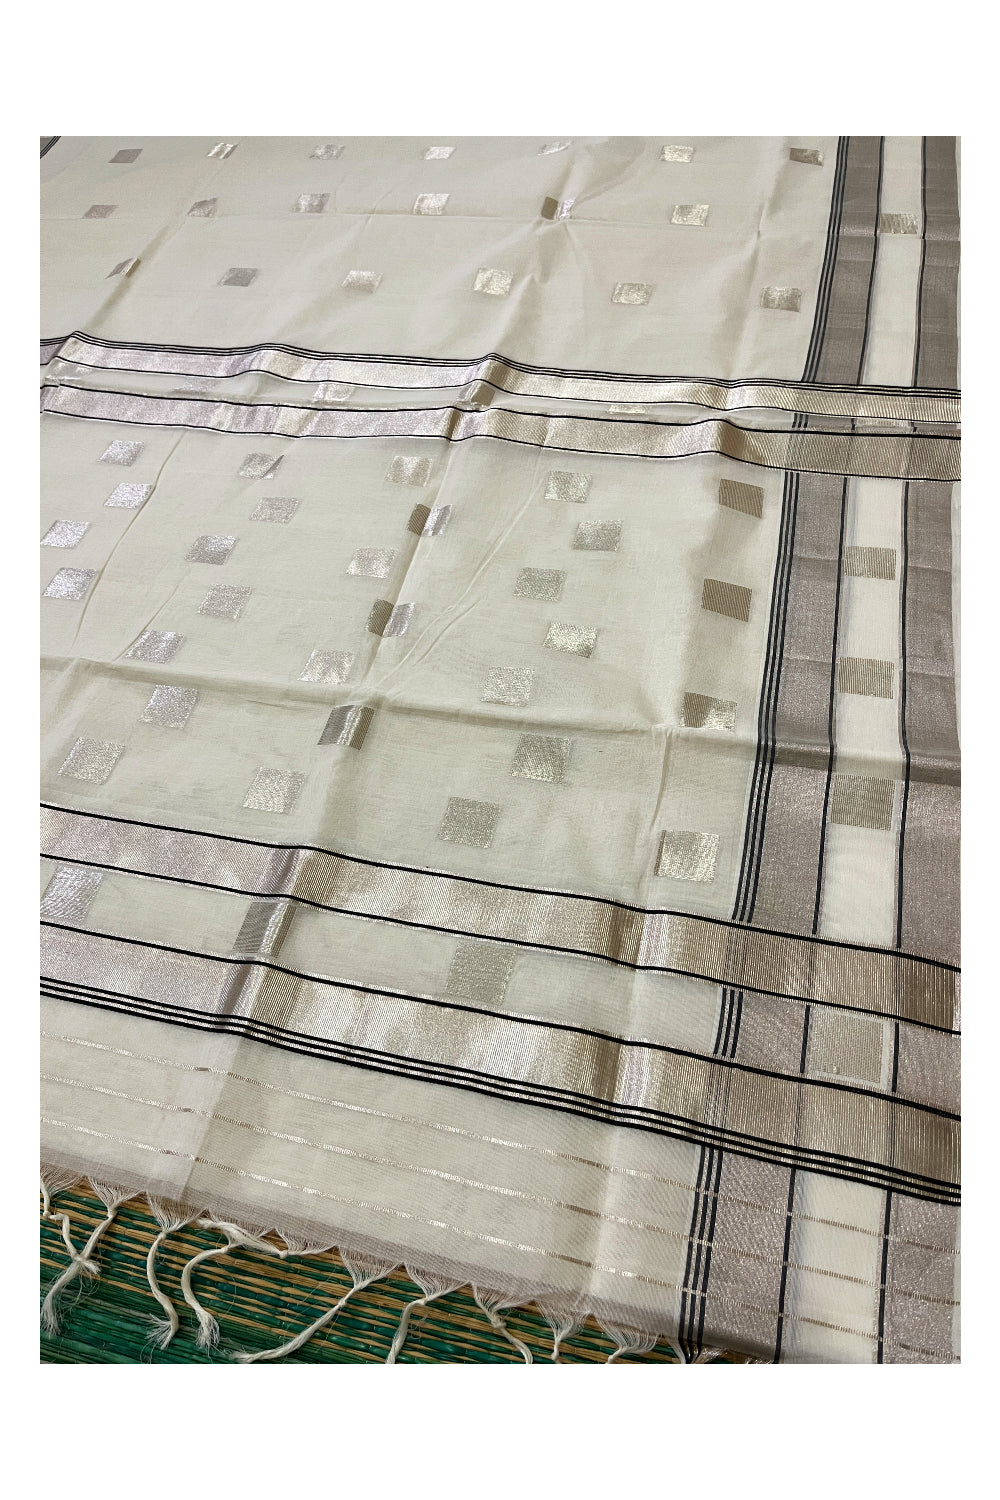 Southloom Premium Handloom Cotton Saree with Silver Kasavu Woven Works on Body